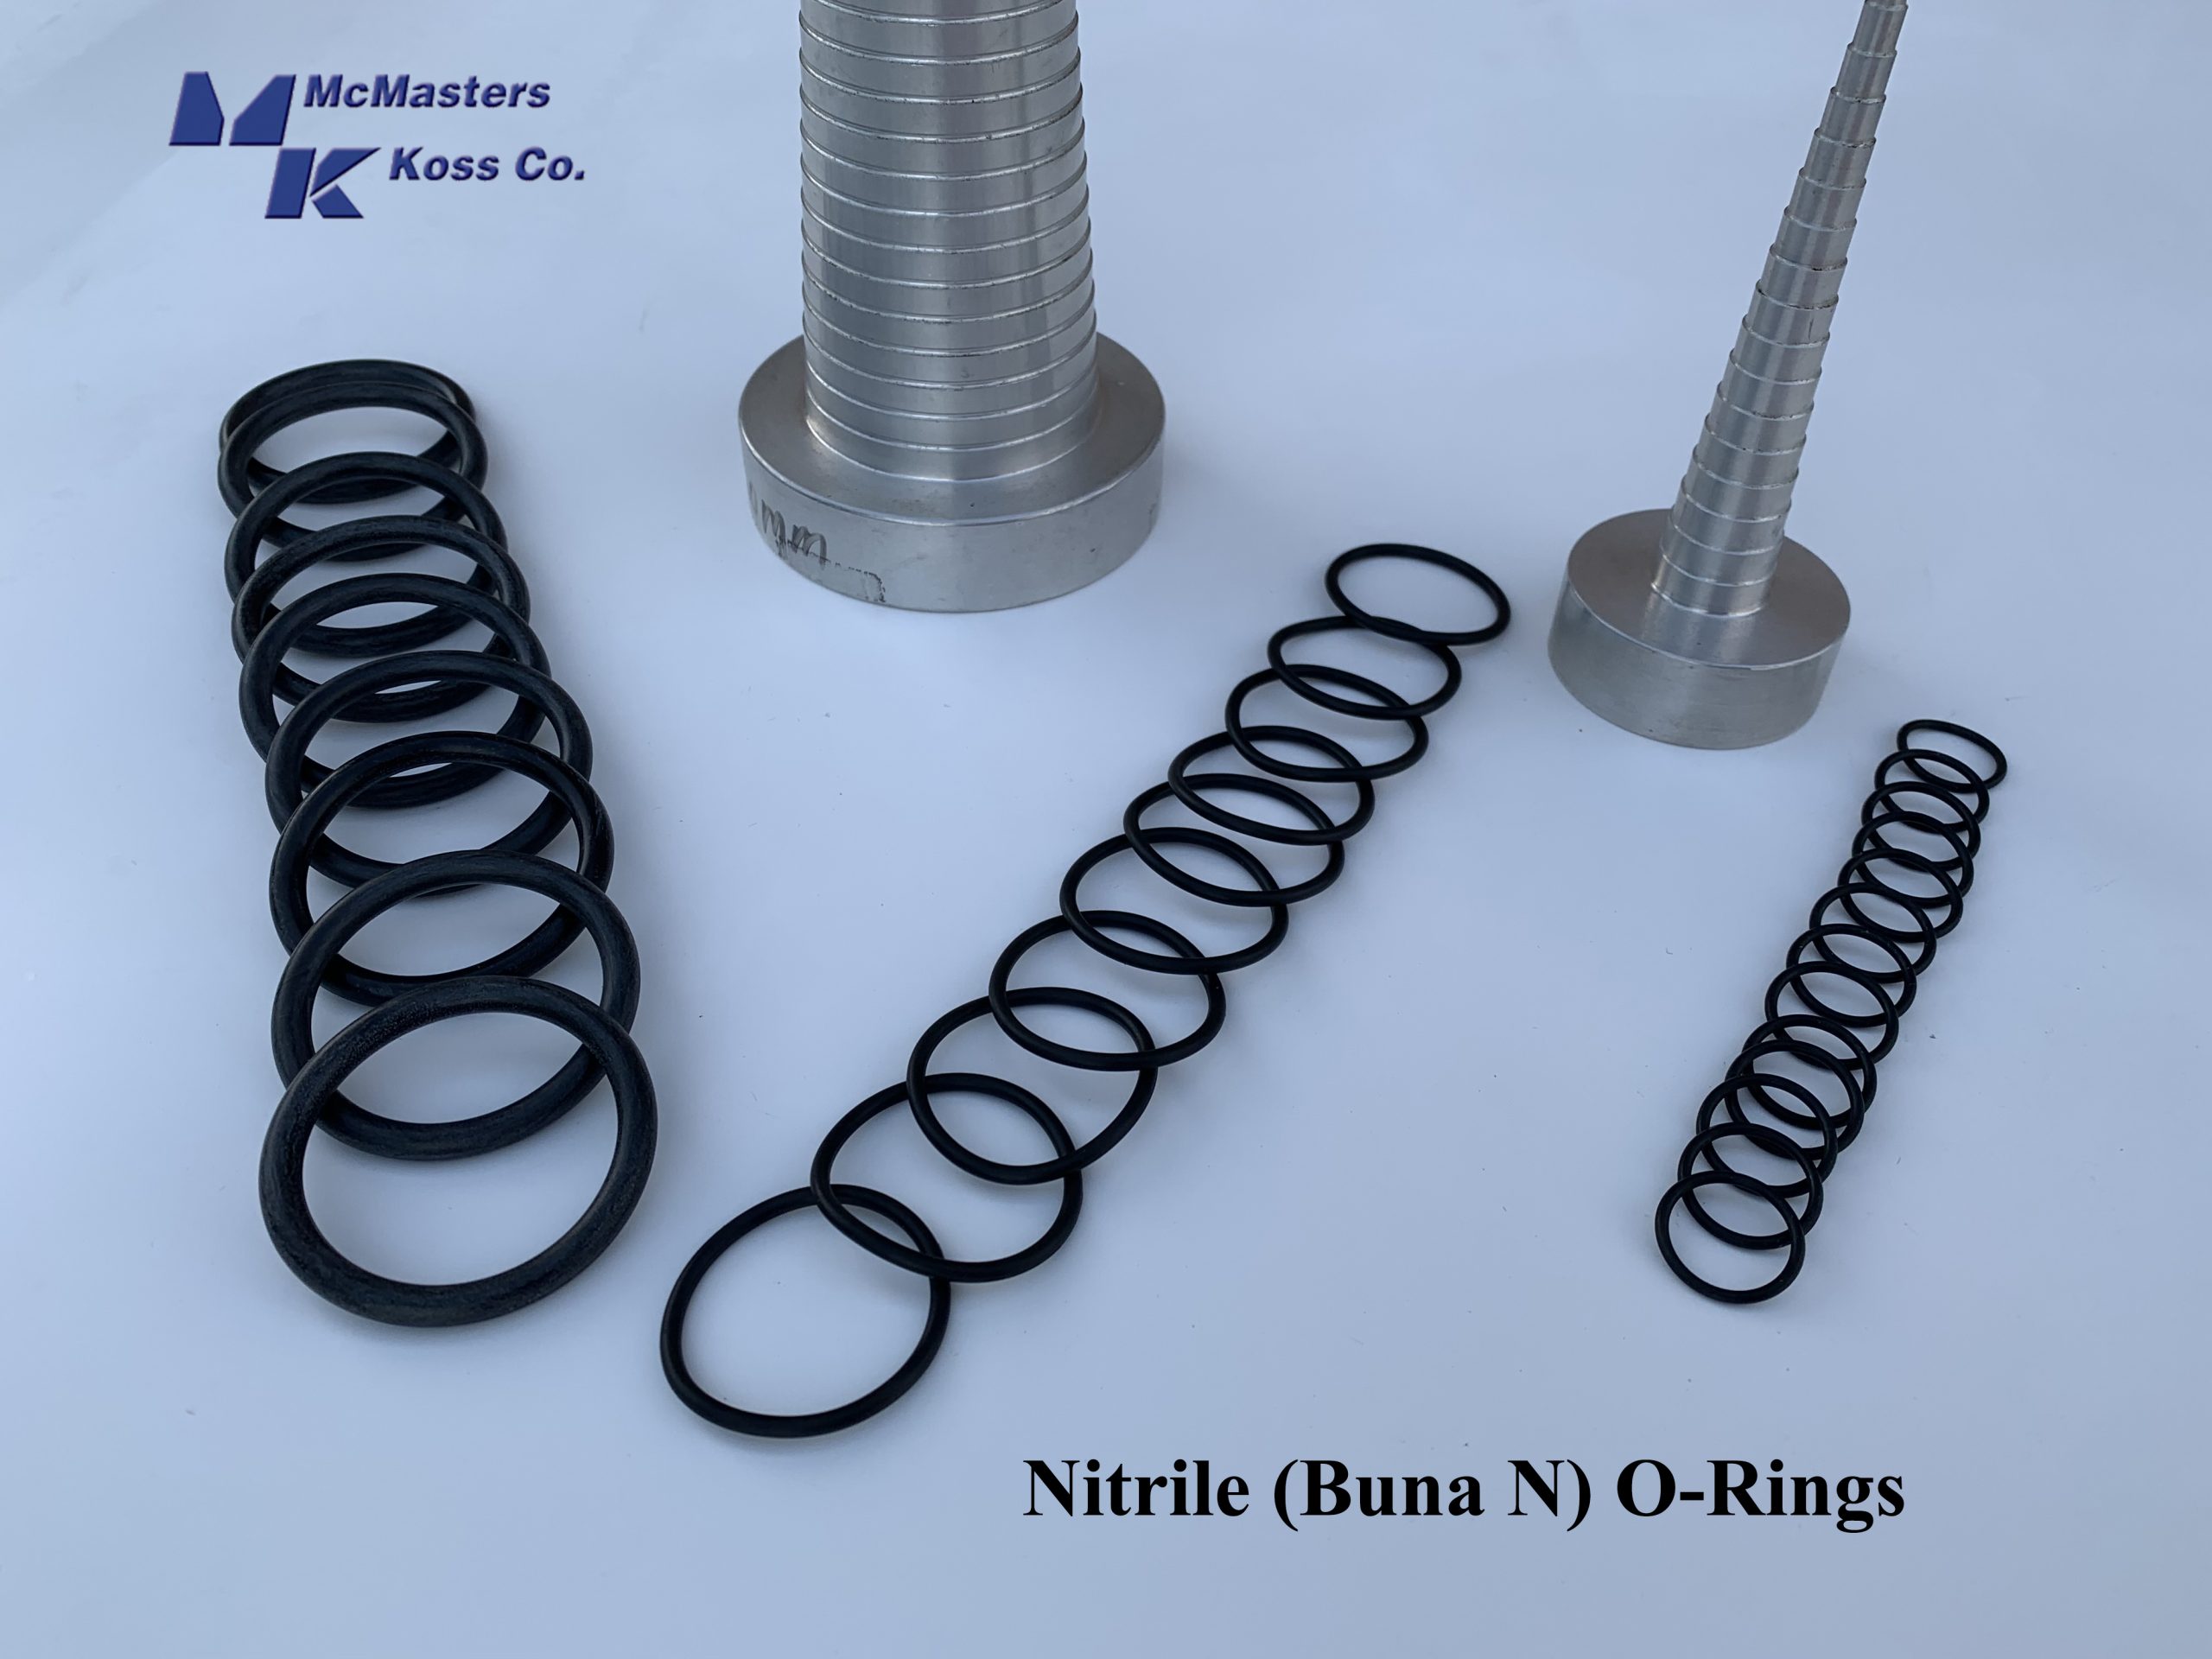 Nitrile O-Rings